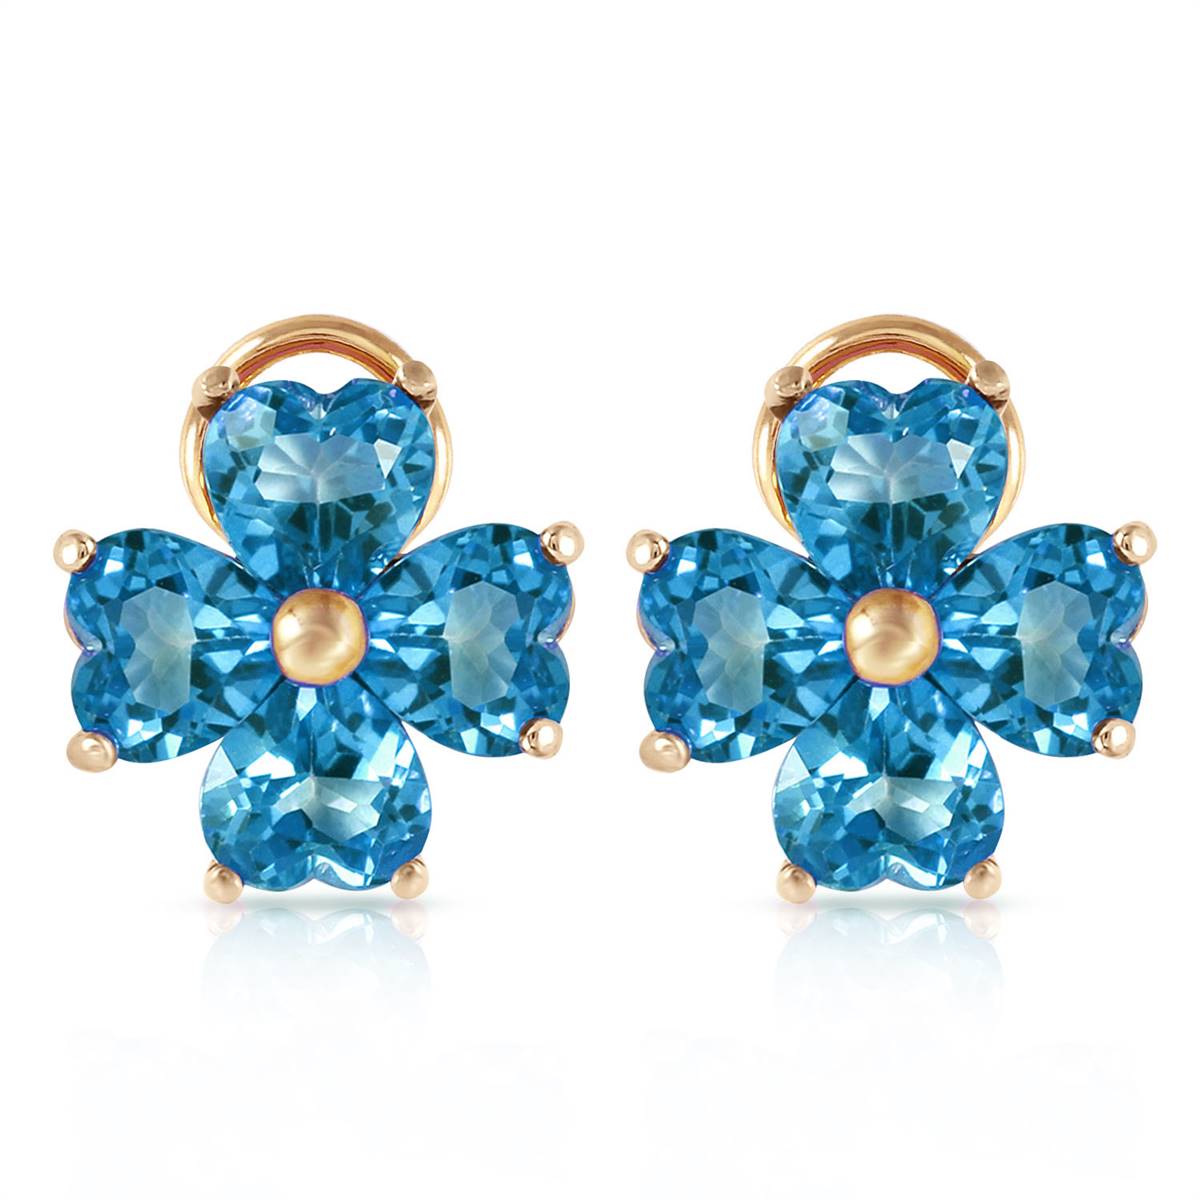 7.6 Carat 14K Solid Yellow Gold Heart Cluster Blue Topaz Earrings